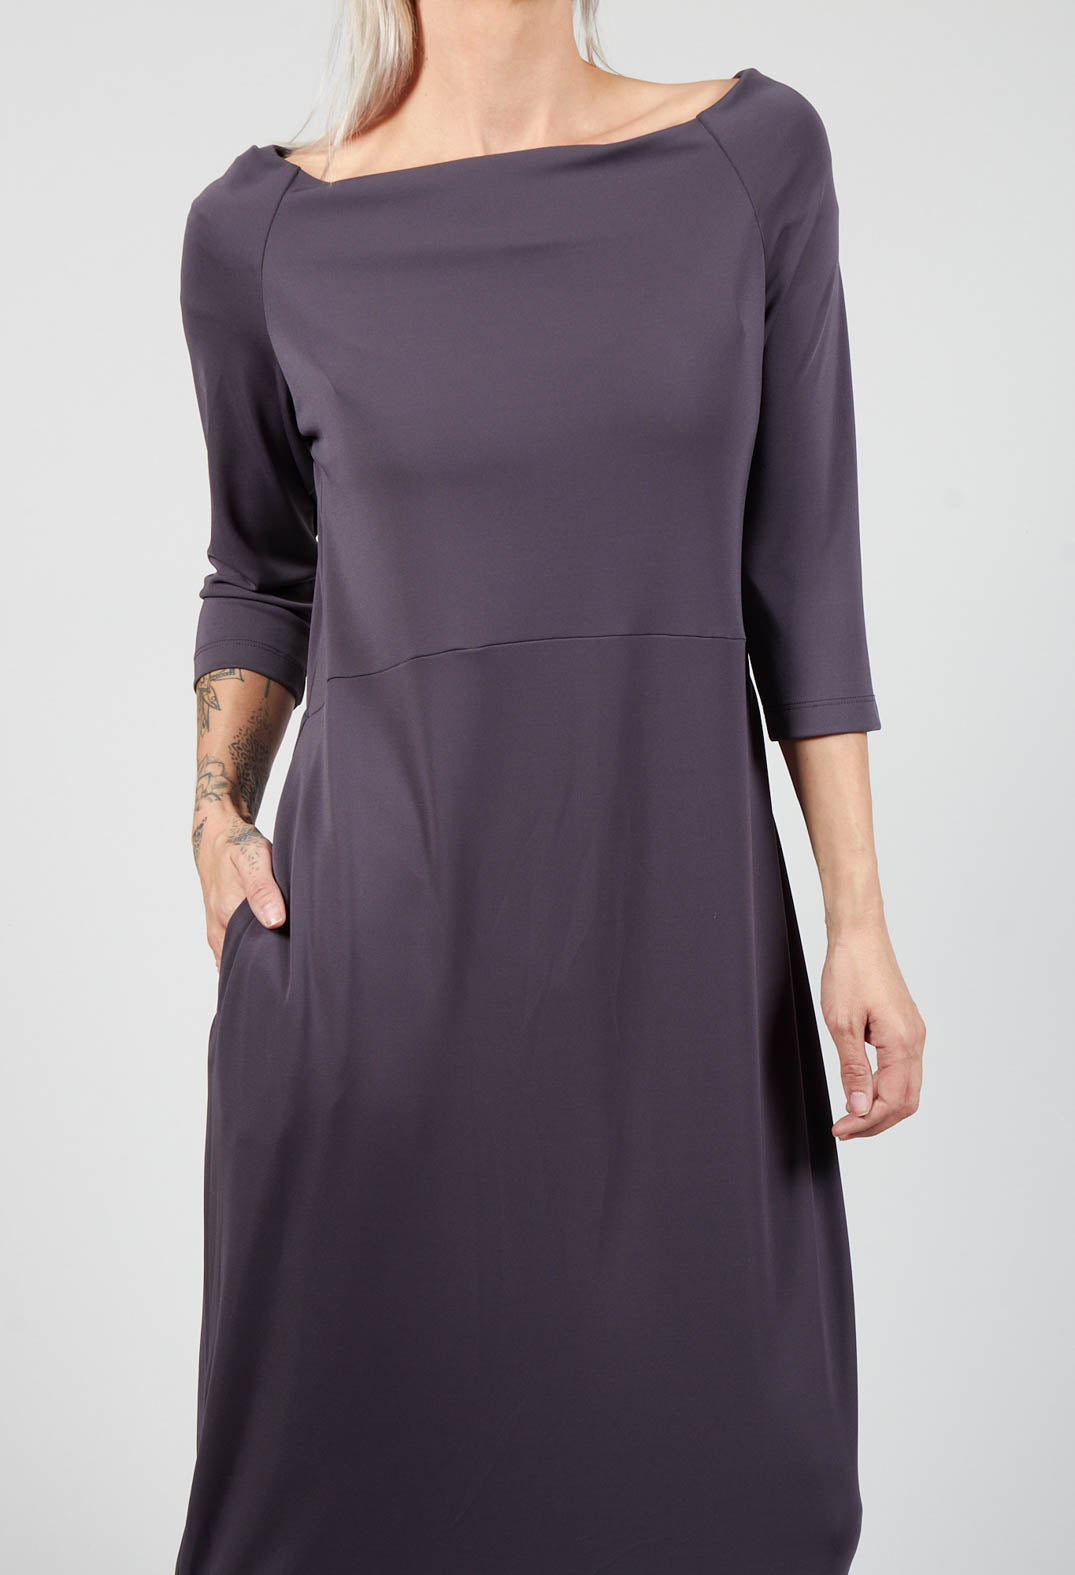 Long Dress with Three Quarter Length Sleeves in Dark Grey